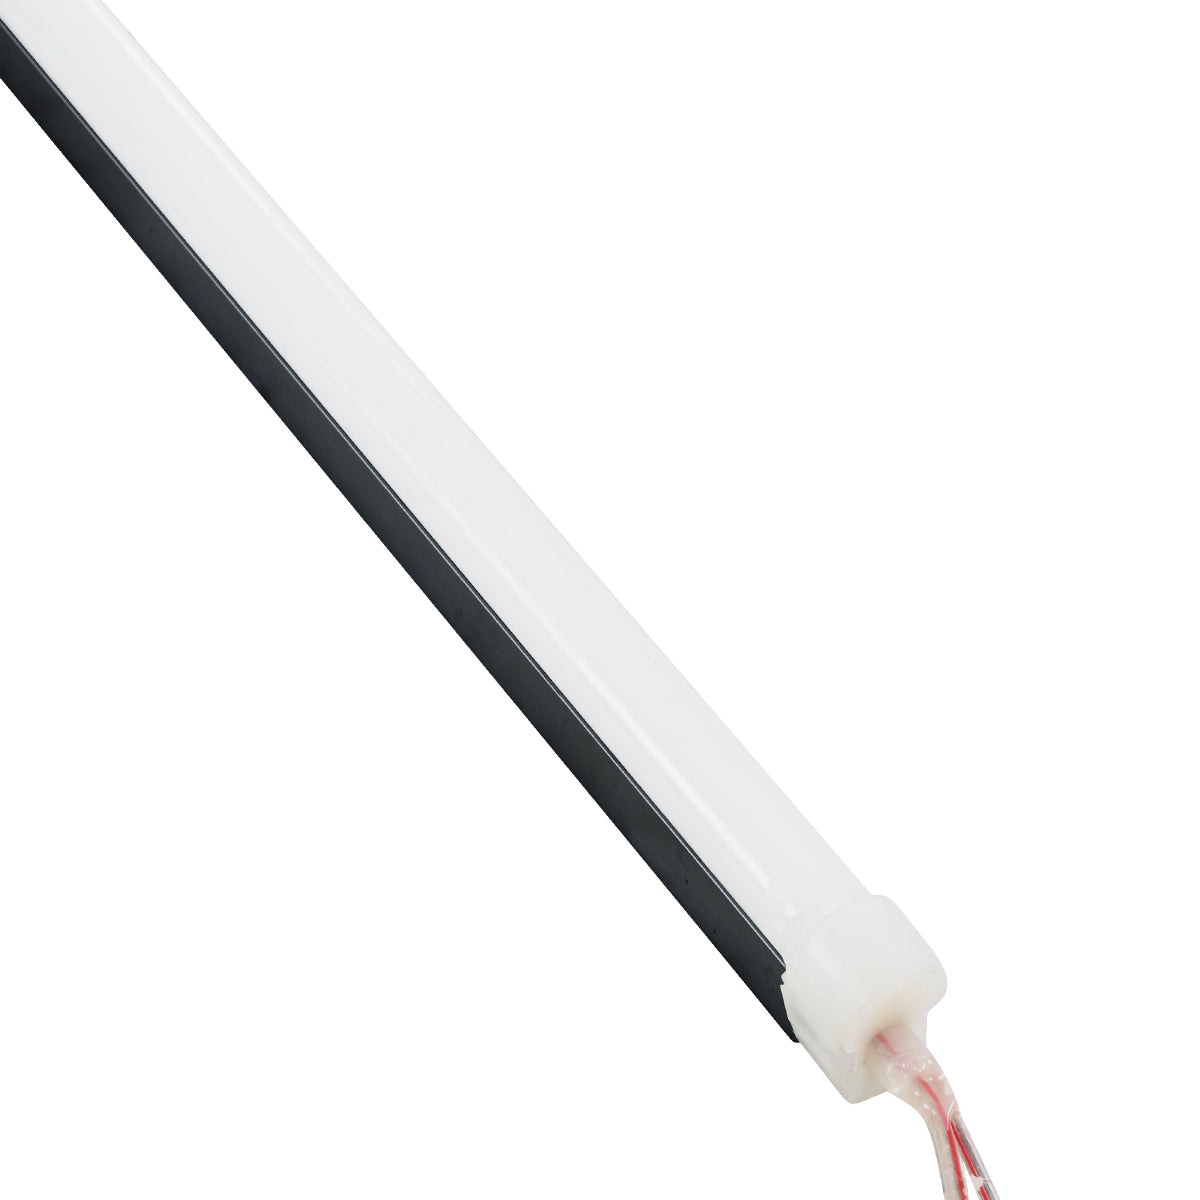 GloboStar® CON-NEONIO 90775 Προφίλ Αλουμινίου 3 Μέτρων - Βάση Στήριξης για την NEONIO Digital Neon Flex LED 14.4W/m 12VDC με Π1 x Υ2.3cm - Μαύρο - Μ300 x Π1.2 x Υ1.3cm